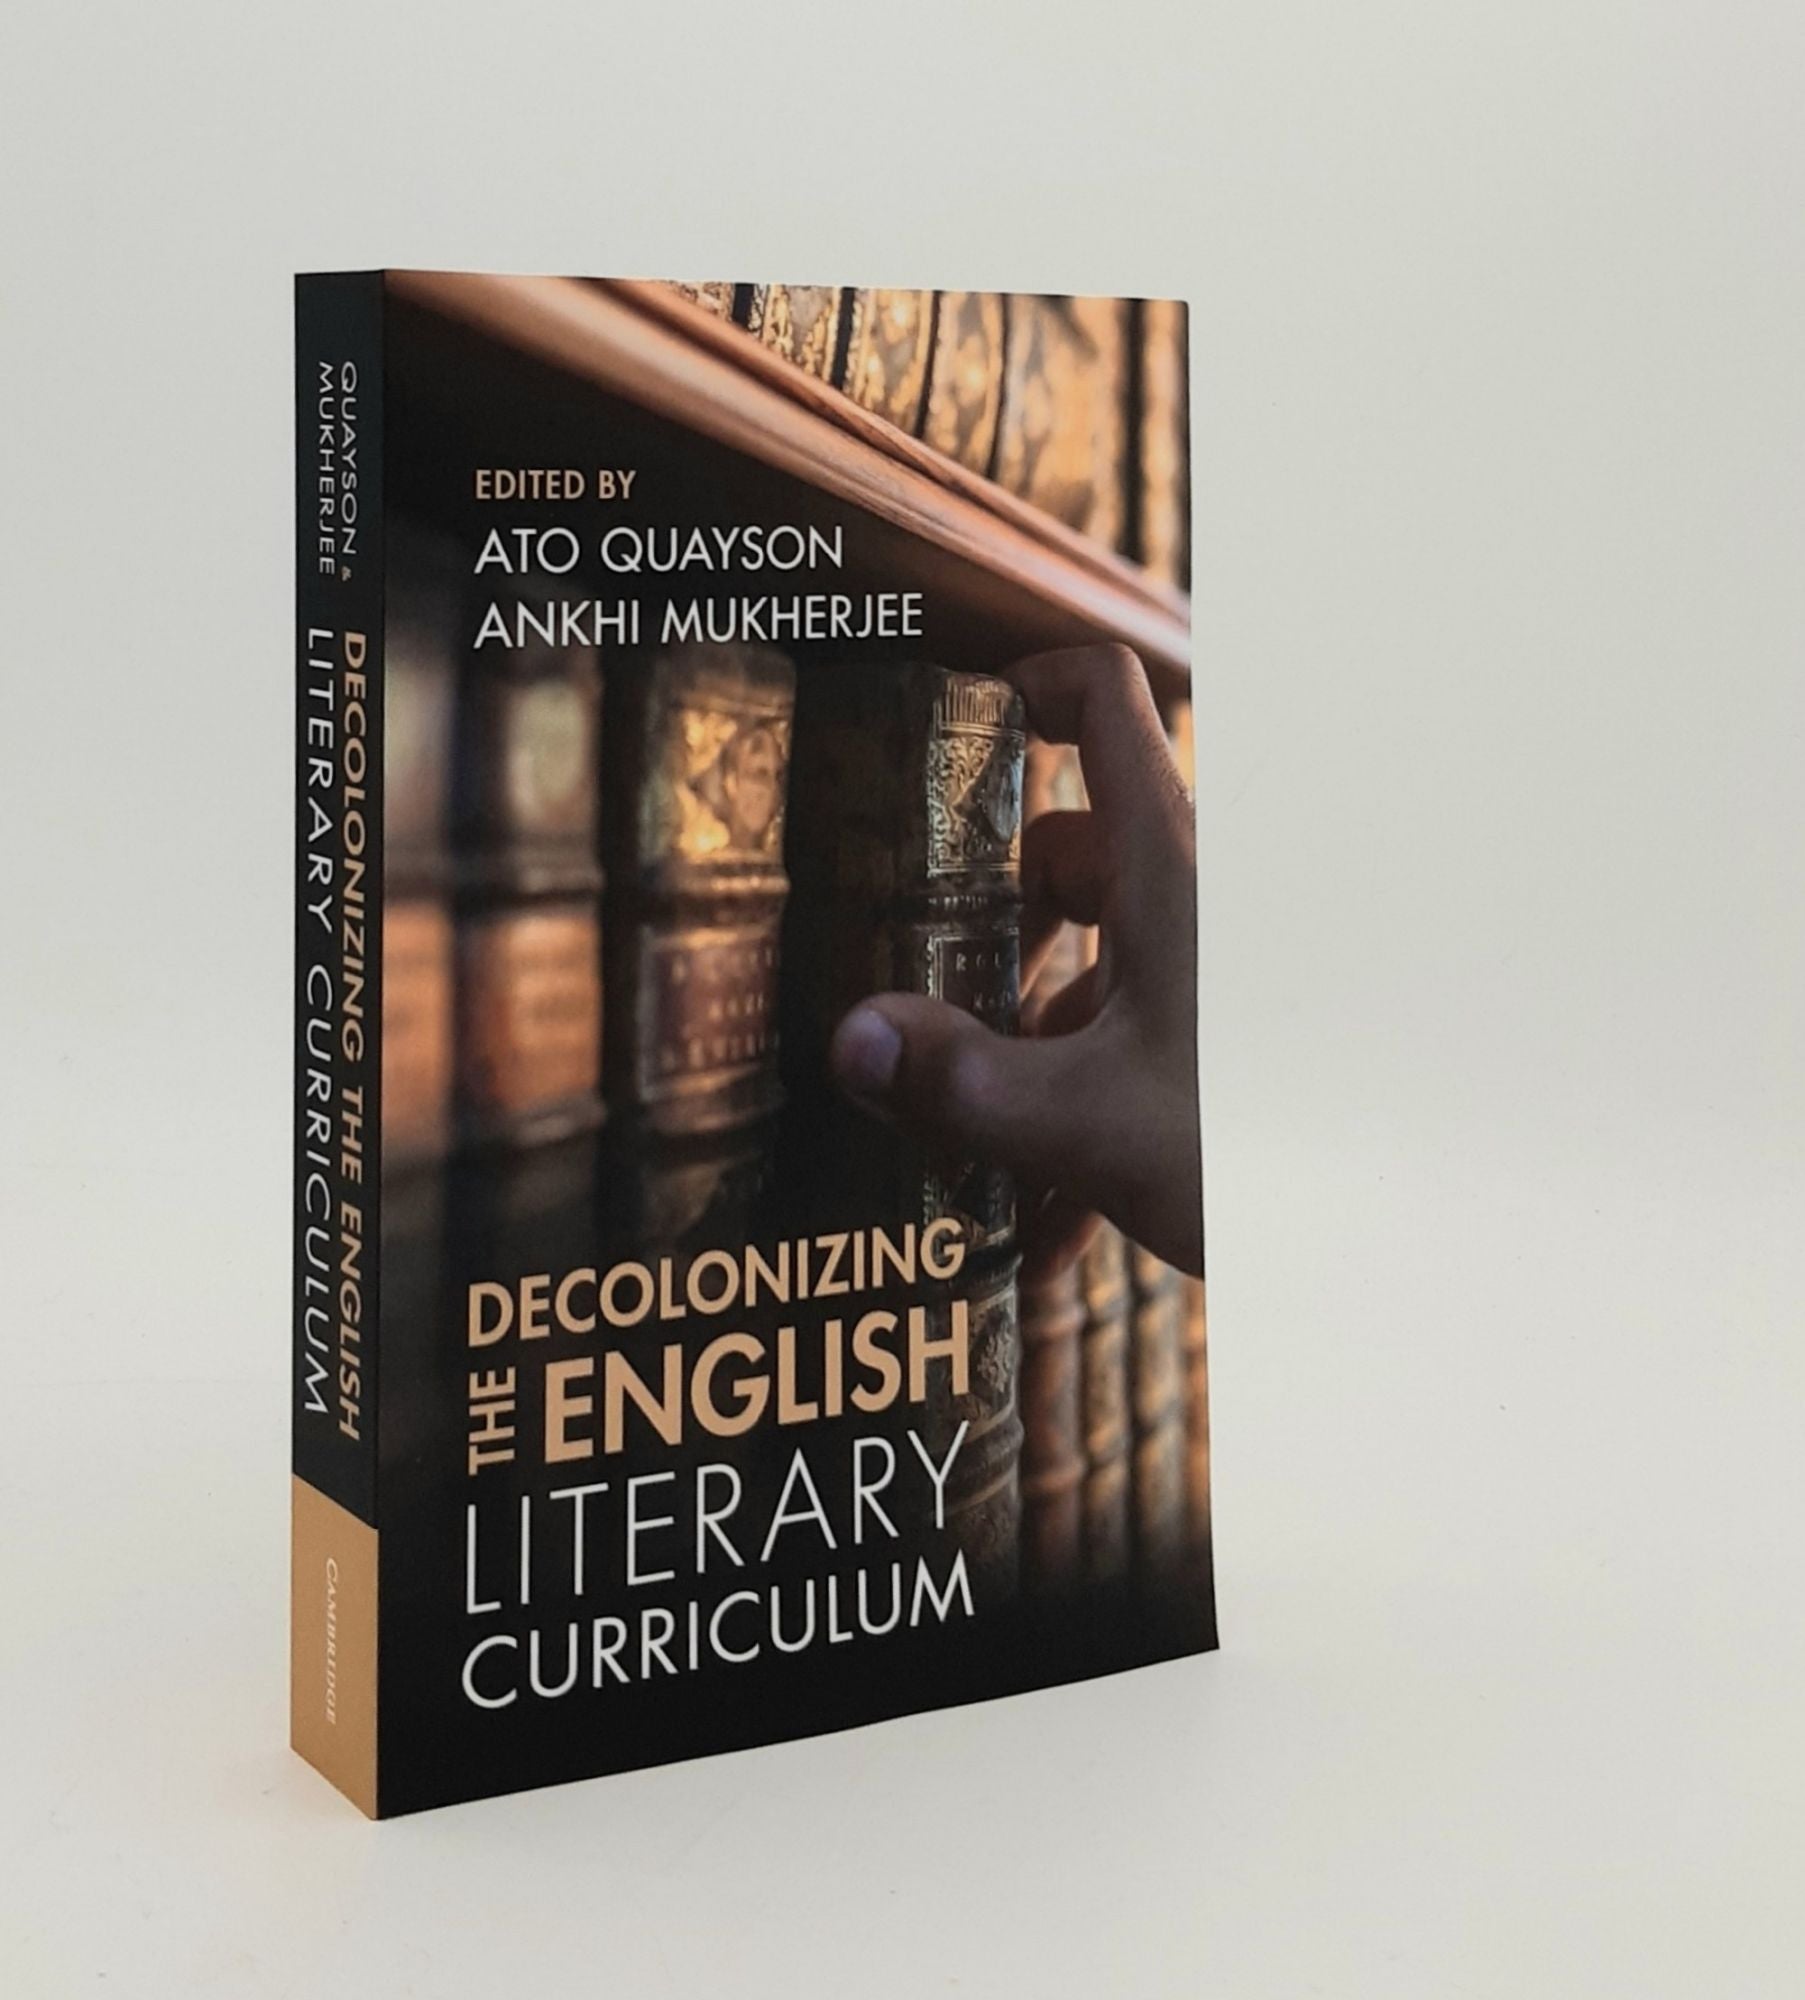 QUAYSON Ato, MUKHERJEE Ankhi - Decolonizing the English Curriculum